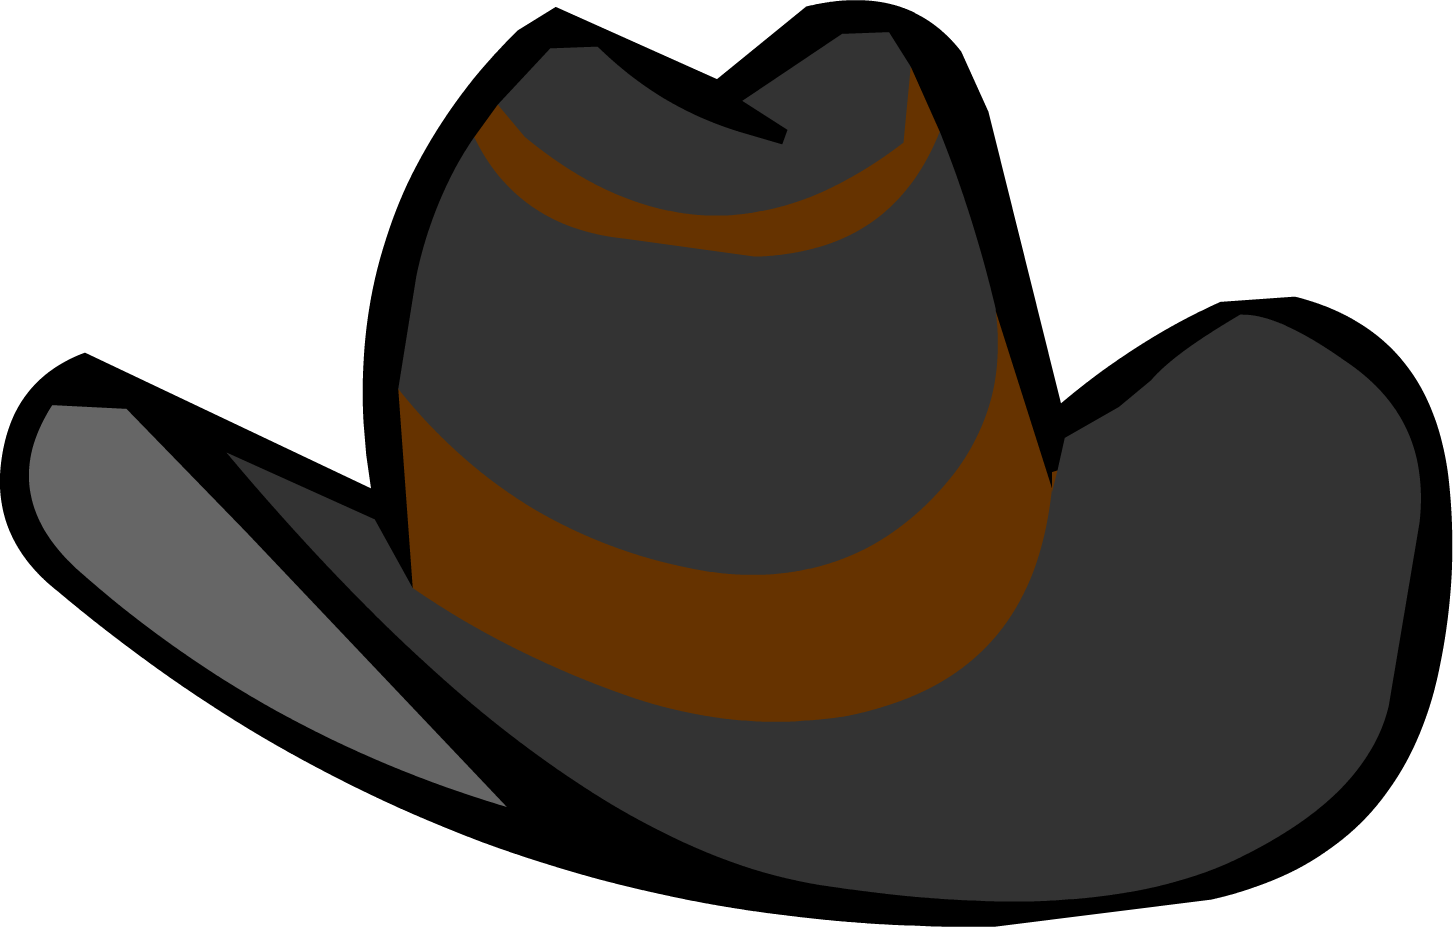 cowboy hat vector free download